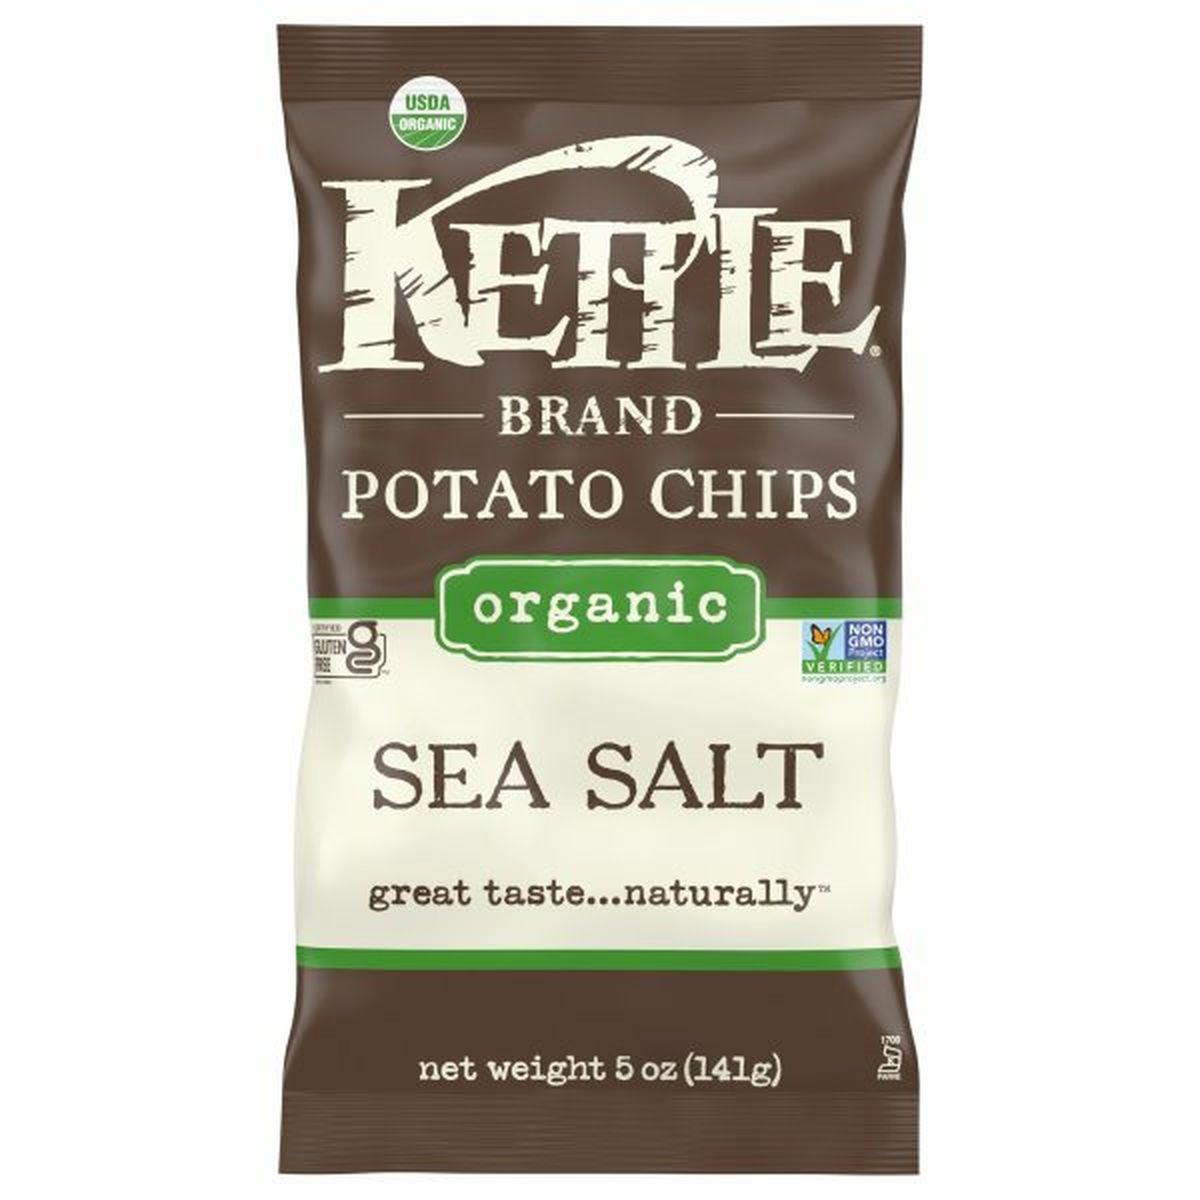 Calories in Kettle Brands Potato Chips, Organic, Sea Salt